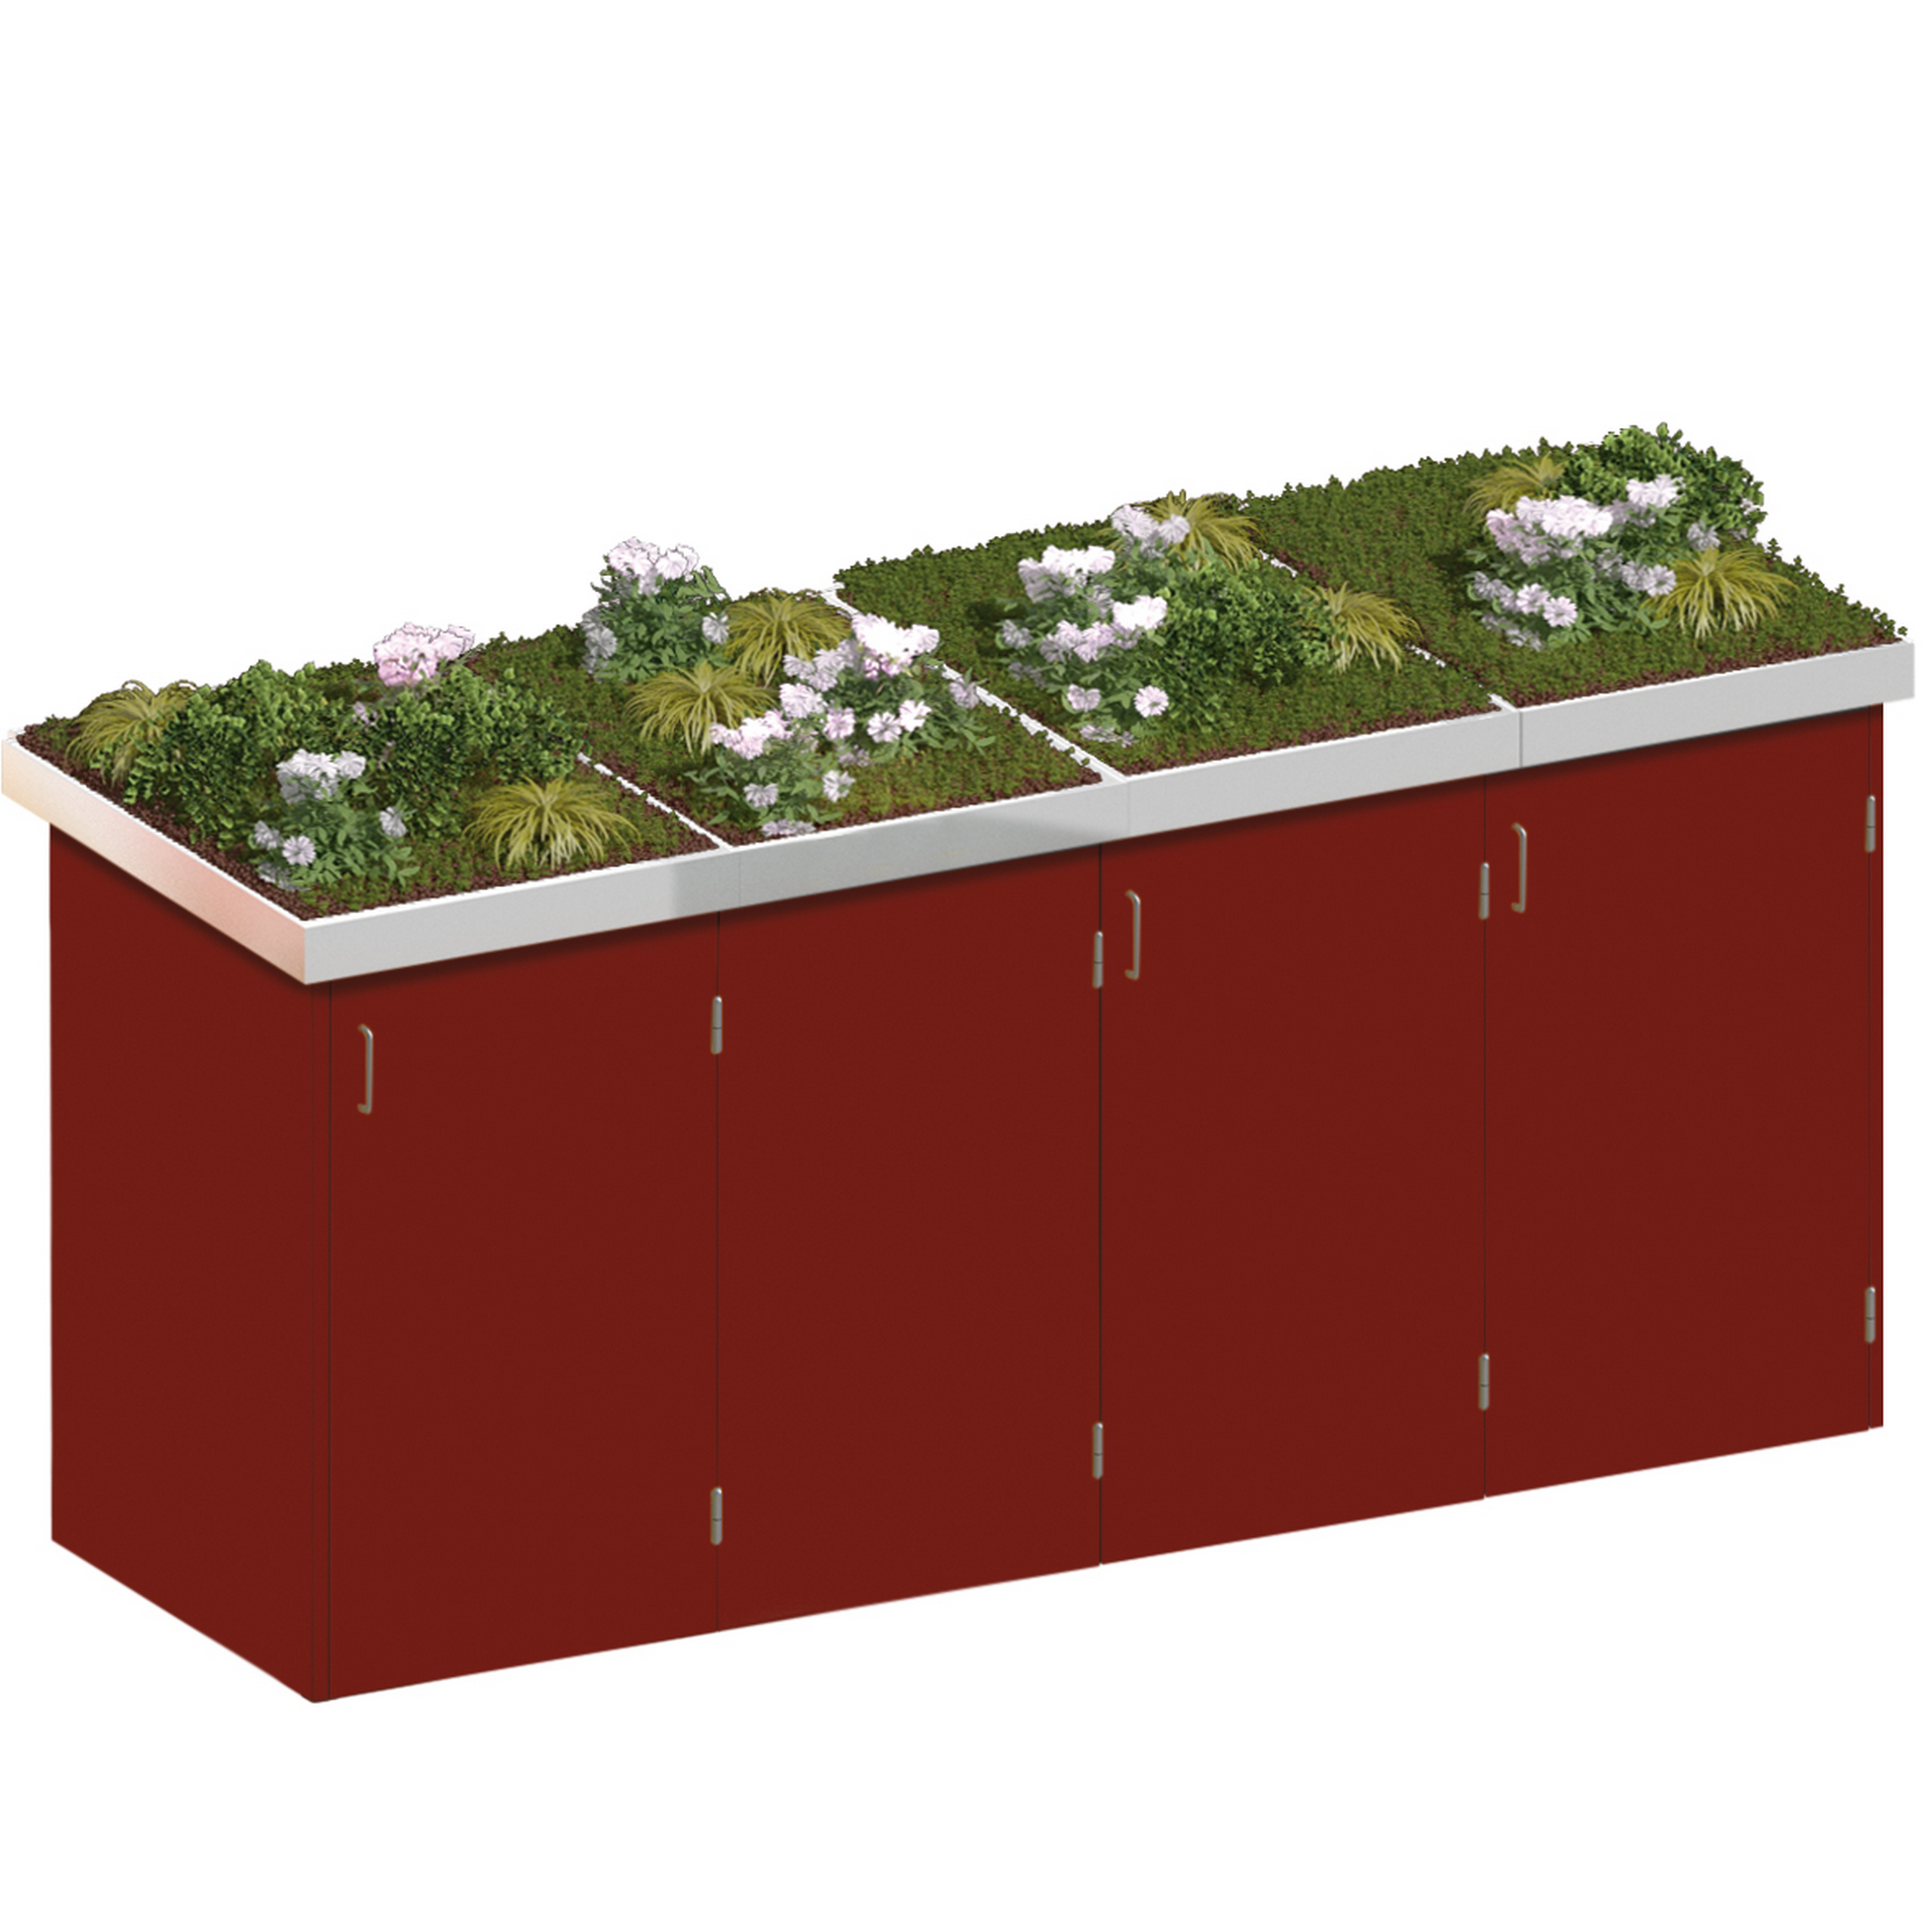 Mülltonnenbox 'Binto' mit Pflanzkasten rot 282 x 129 x 90 cm + product picture